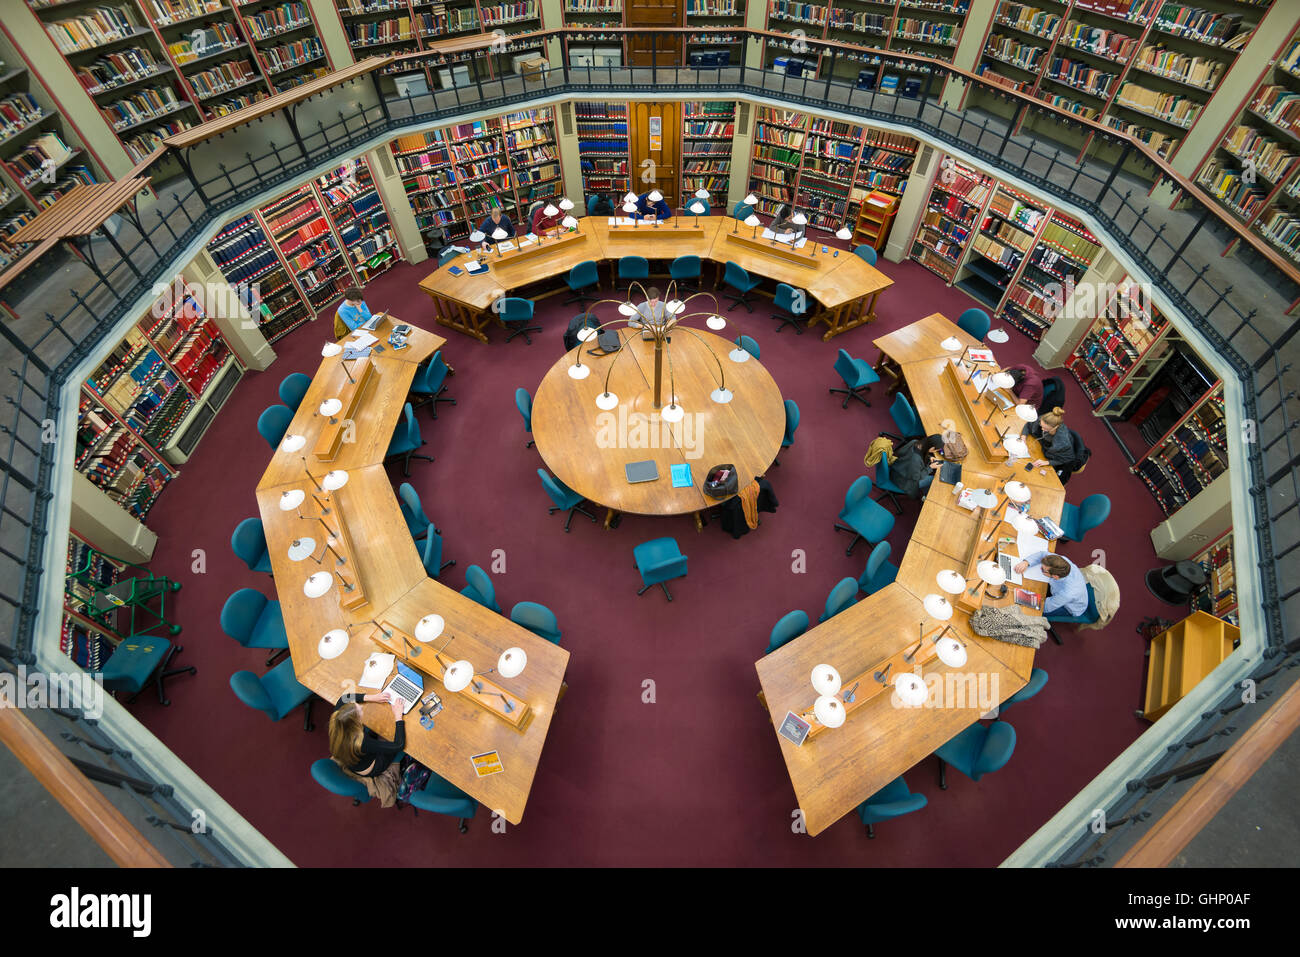 Abovedada de sala de lectura, biblioteca Maughan, King's College London, Londres, Reino Unido Foto de stock